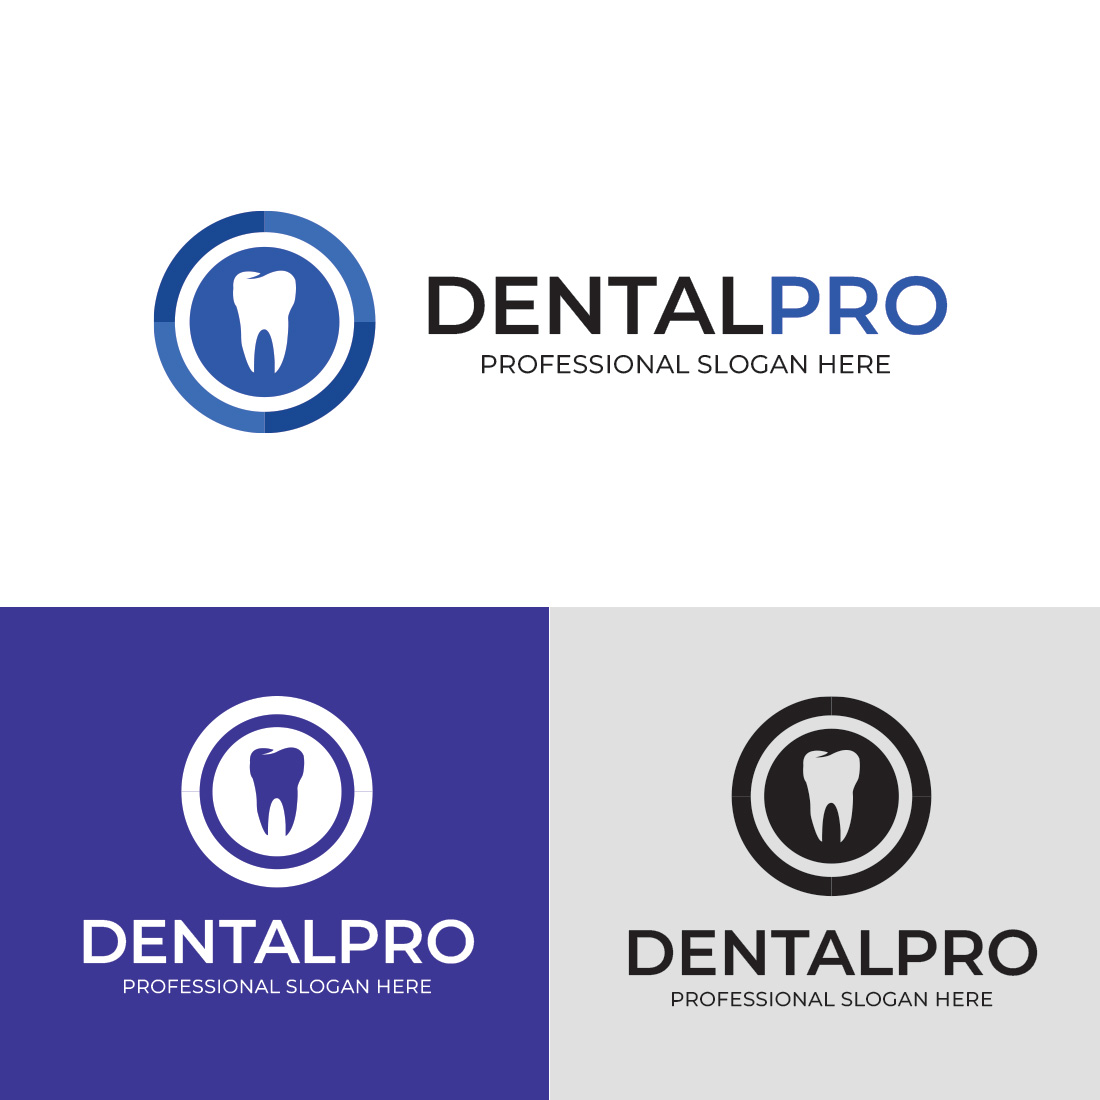 Dental Logo Template - DentalPro cover image.